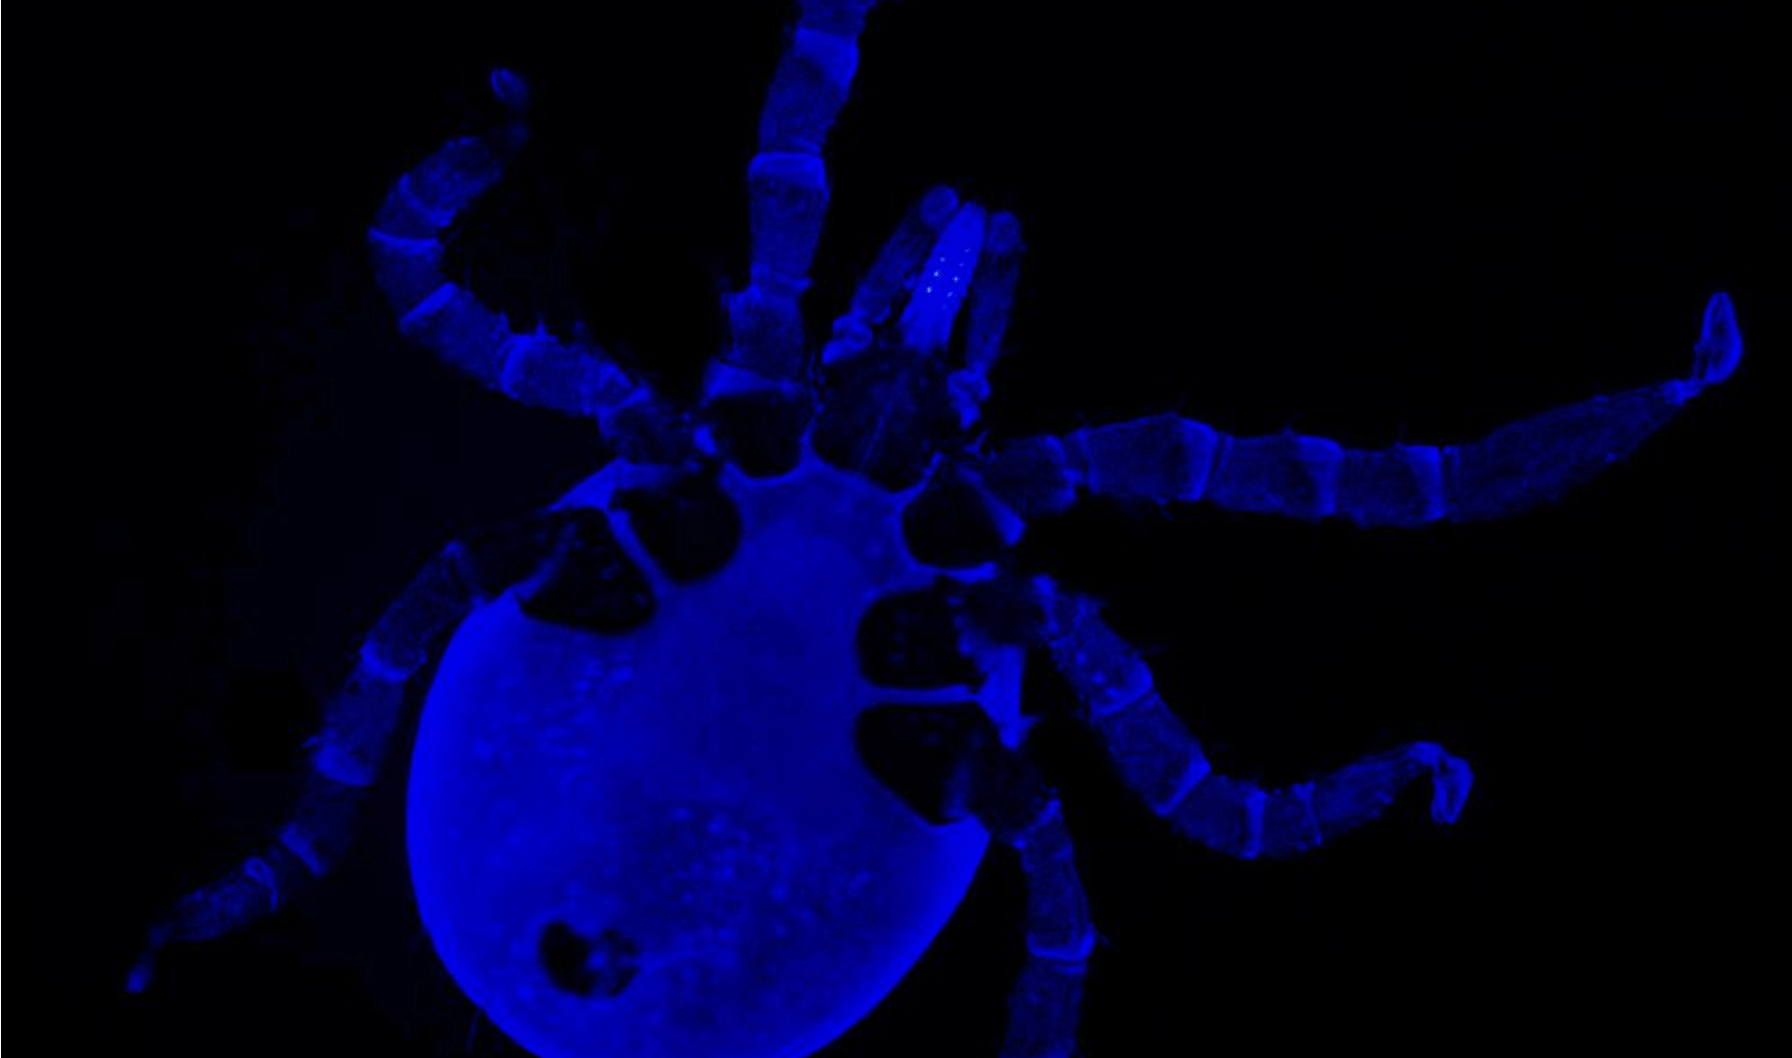 Black-legged tick larva imaged with blue fluorescence.